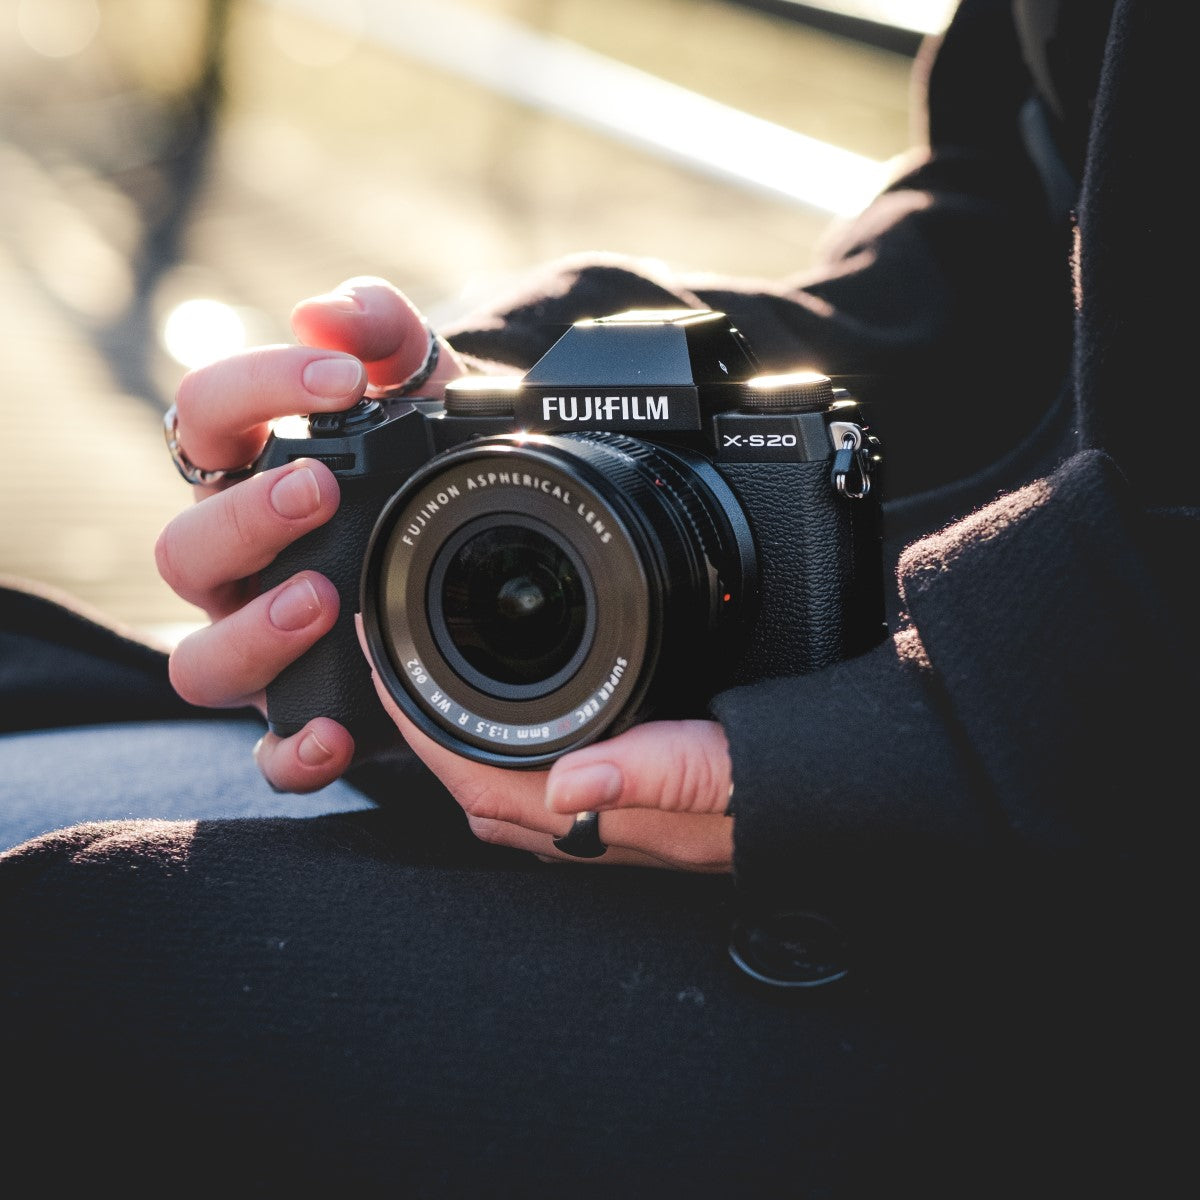 Fujifilm X-S20 กล้องดิจิทัล mirrorless ขนาดกระทัดรัด น้ำหนักเบา สามารถถ่ายได้ทั้งภาพนิ่ง และมีโหมด Vlog สามารถถ่าย Vlog ได้อย่างง่ายดาย